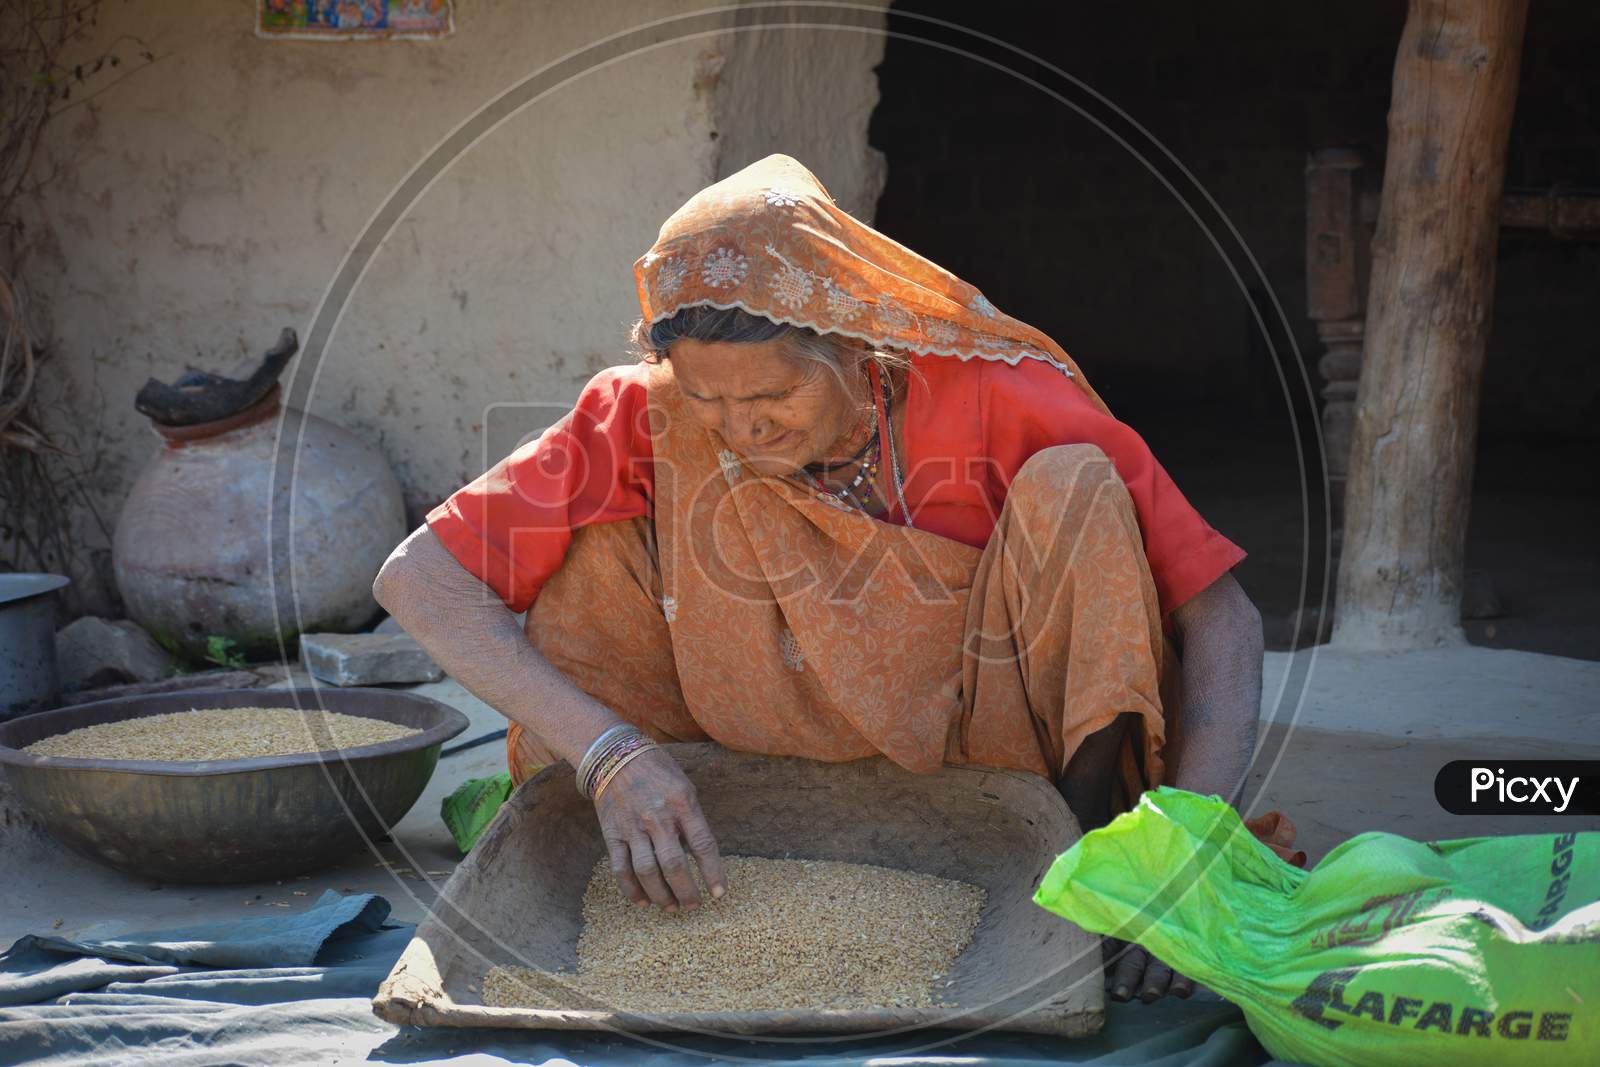 TIKAMGARH, MADHYA PRADESH, INDIA - FEBRUARY 03, 2020: An old woman in an Indian village.